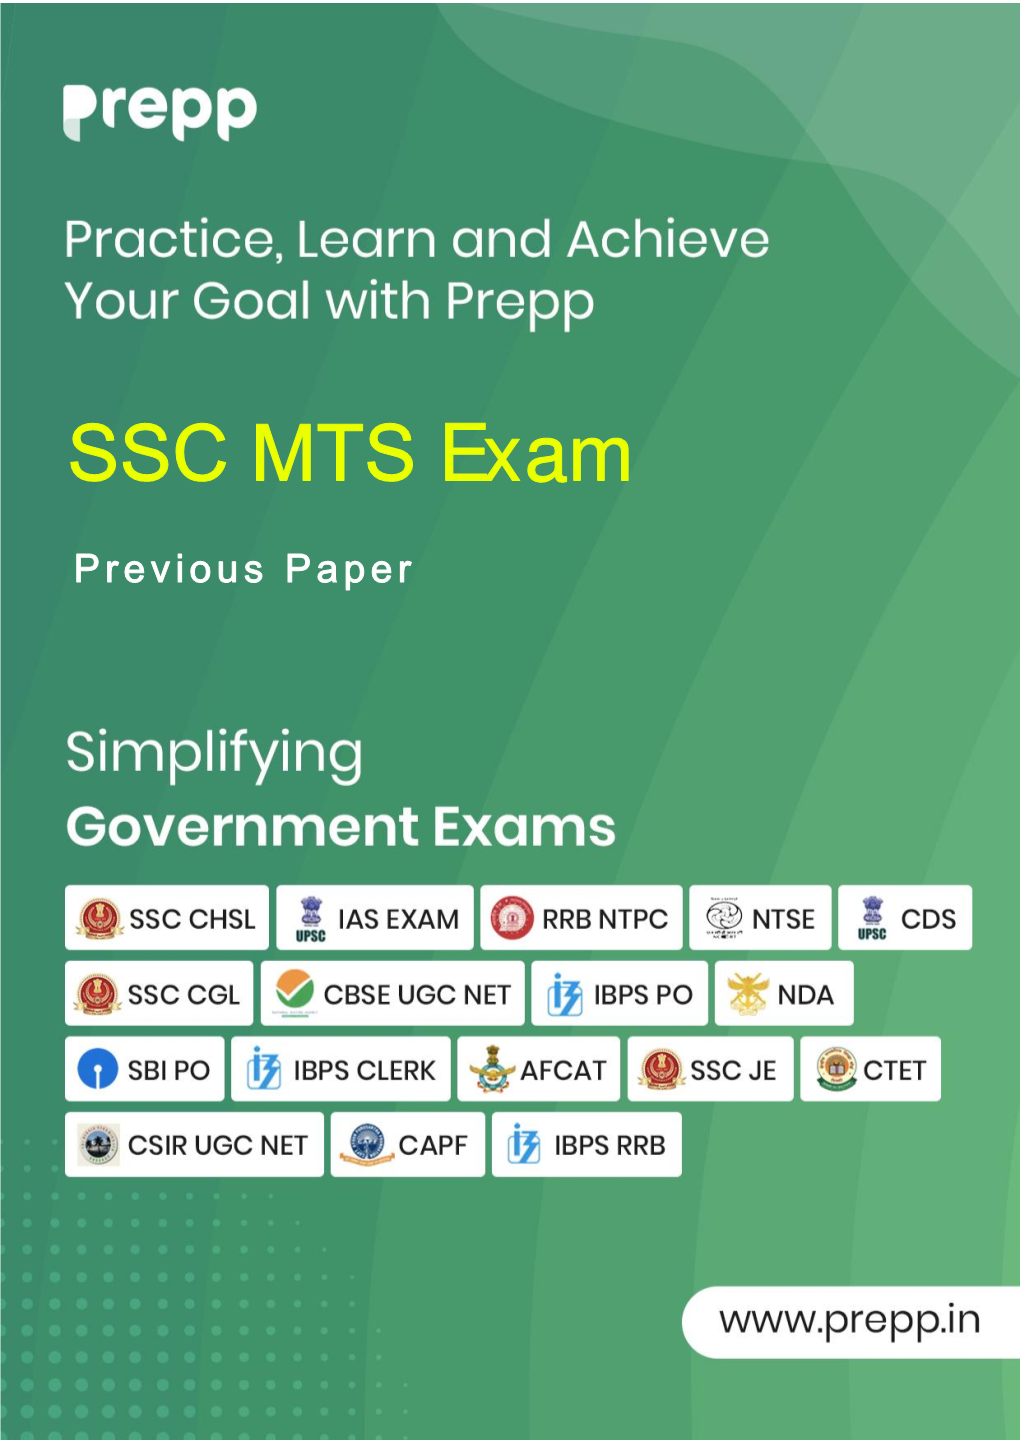 SSC MTS Exam